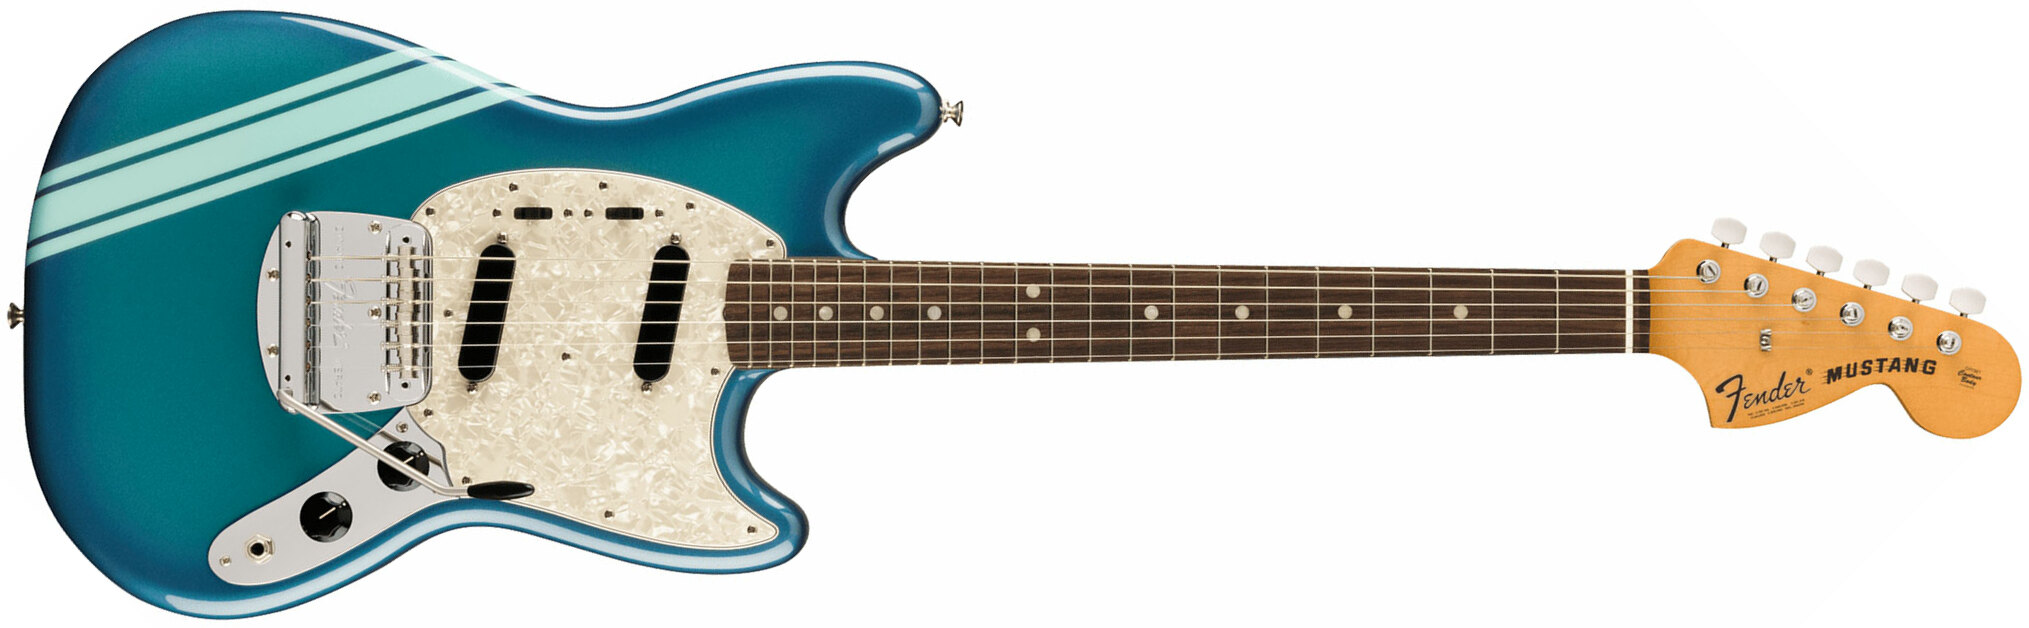 Fender Mustang 70s Competition Vintera 2 Mex 2s Trem Rw - Competition Blue - Retro-rock elektrische gitaar - Main picture